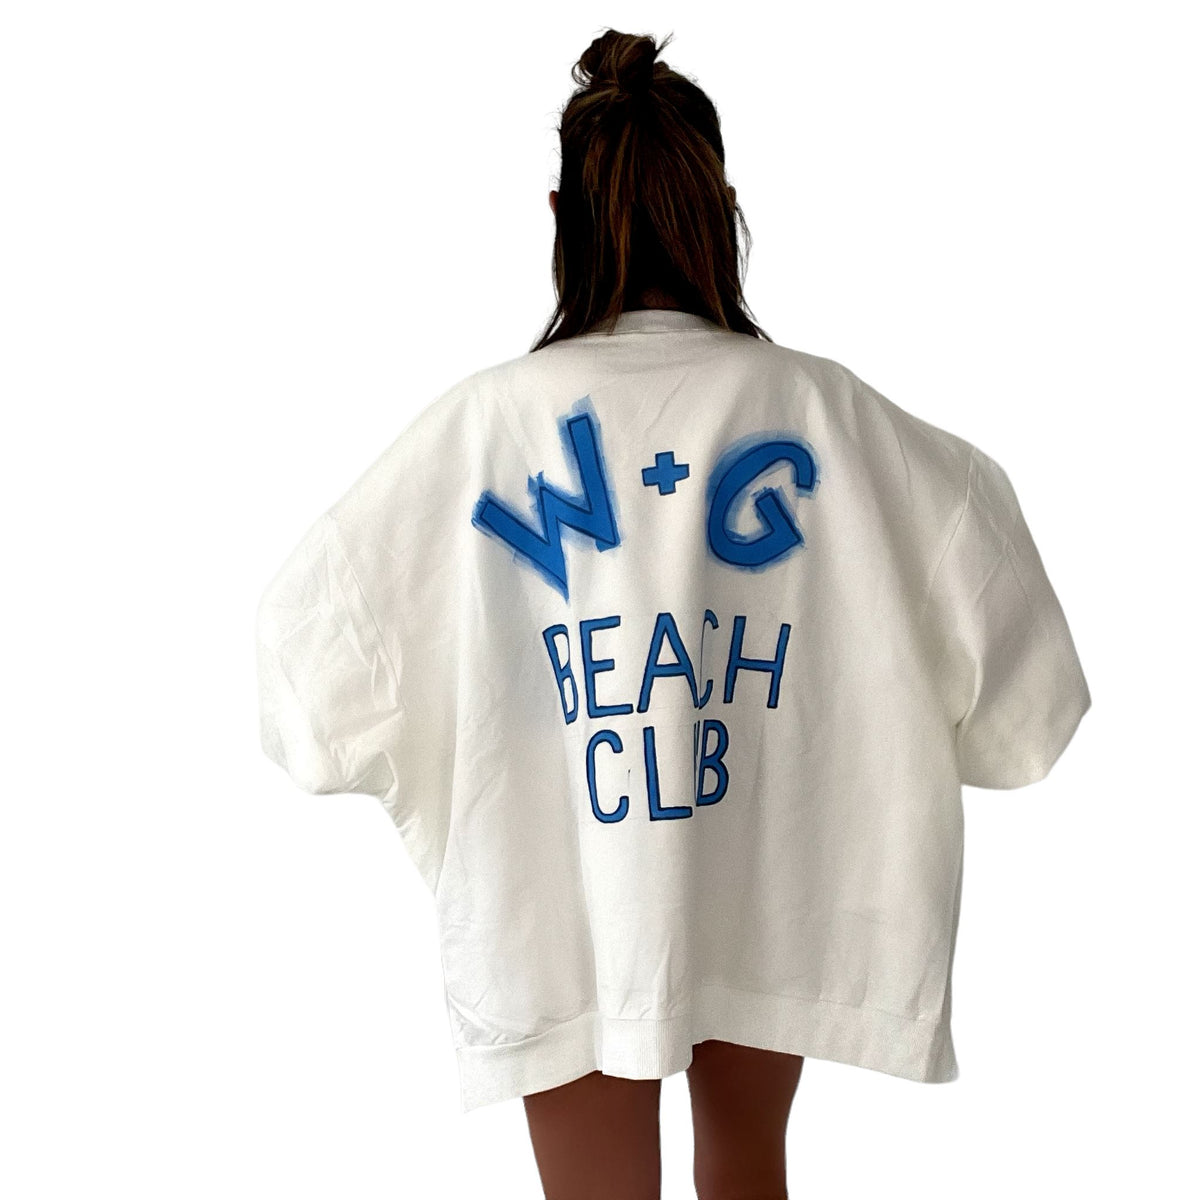 'W+G Beach Club' Painted Crewneck